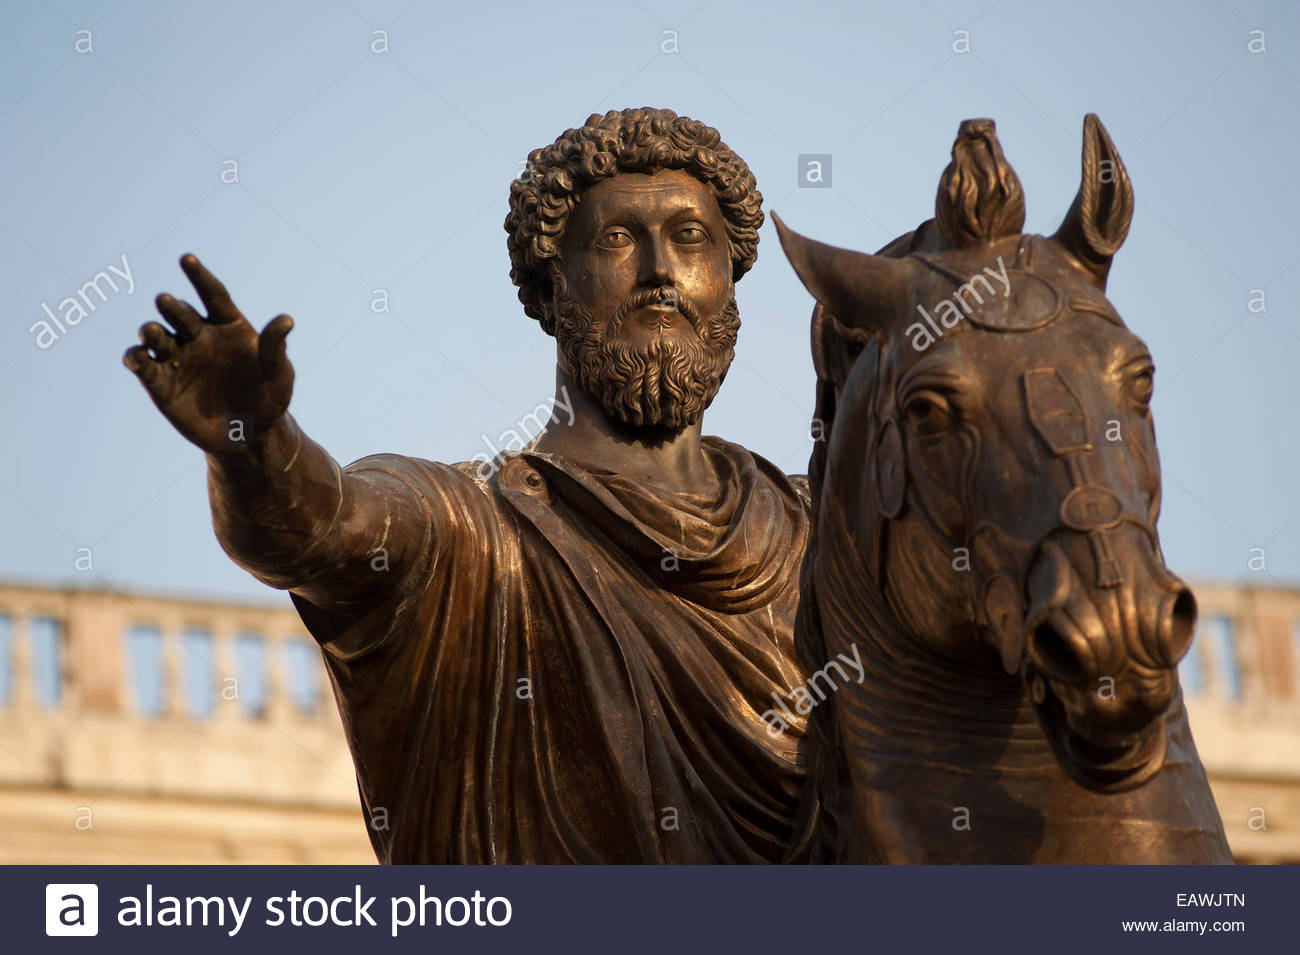 The Equestrian Statue Of Marcus Aurelius Stands On Capitoline Hill EAWJTN 